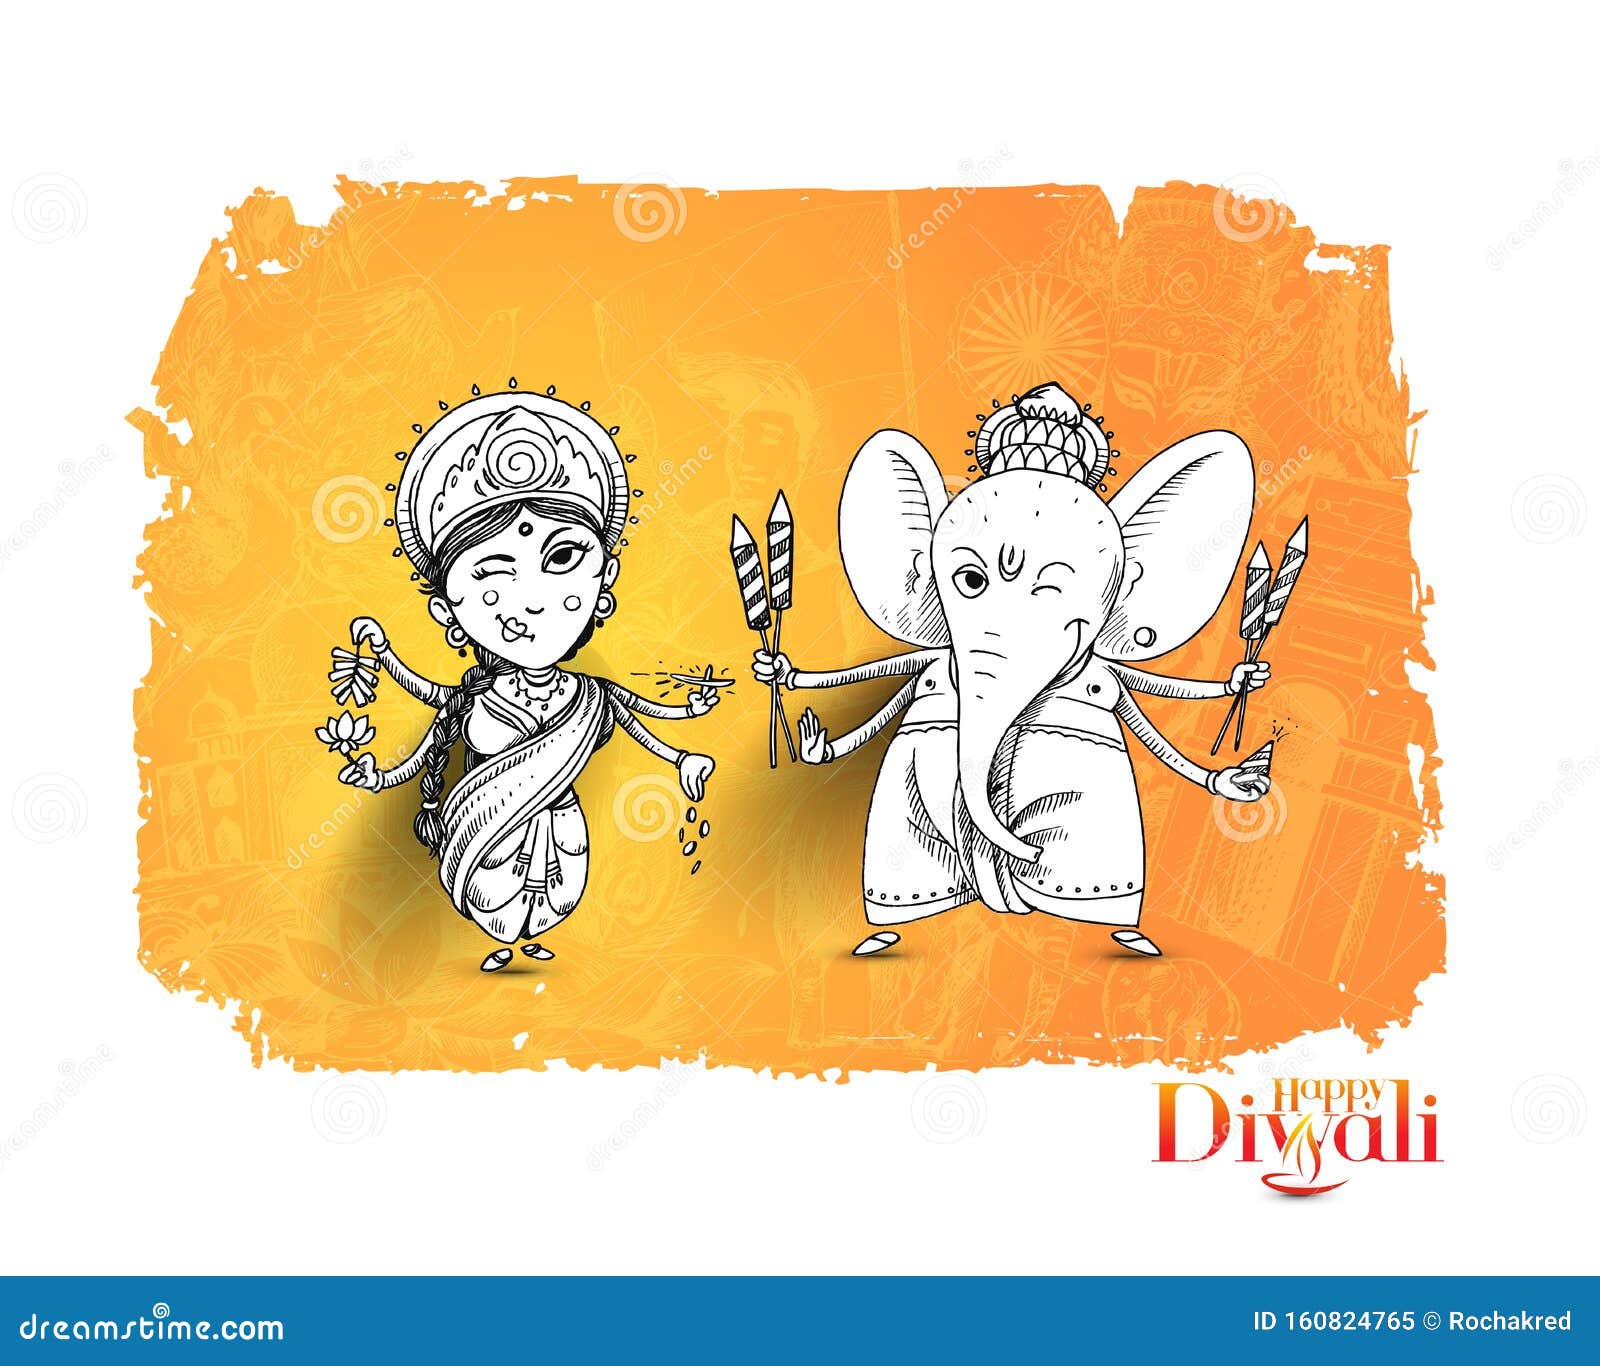 Hindu God Laxmi Ganesh at Diwali Festival Stock Vector - Illustration of  graphic, cartoon: 160824765